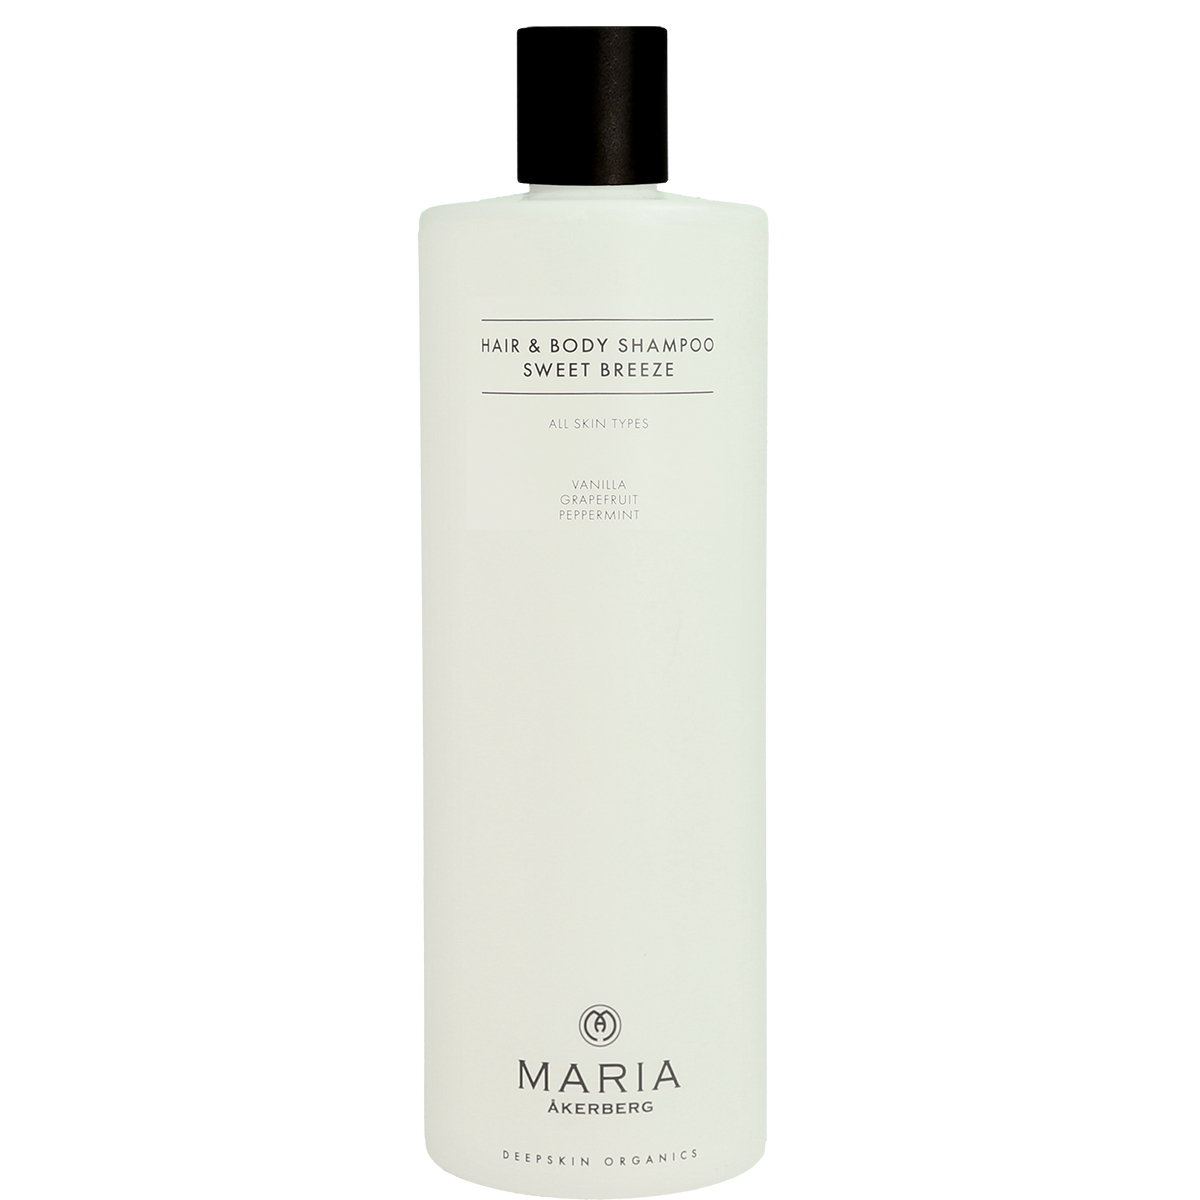 Maria Åkerberg Hair & Body Shampoo Sweet Breeze